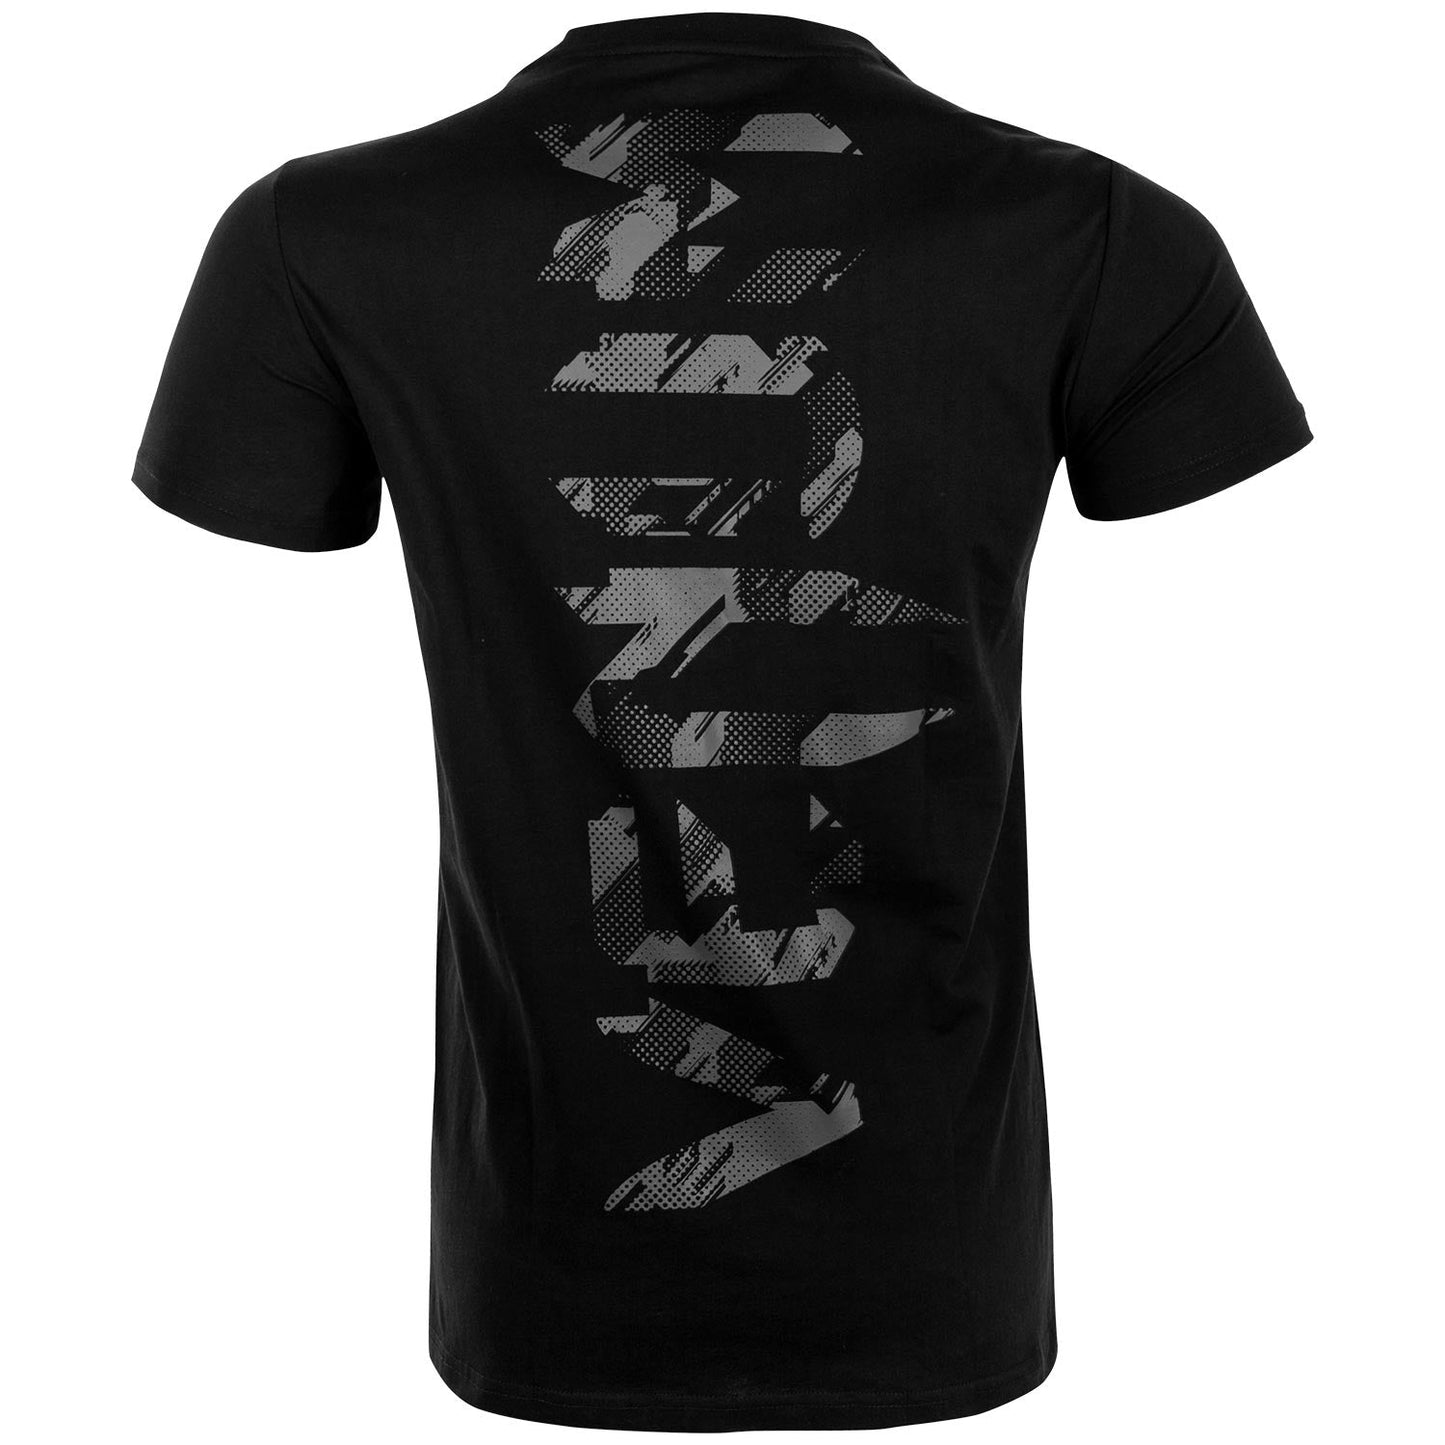 Venum Tecmo Giant T-shirt - Black/Grey